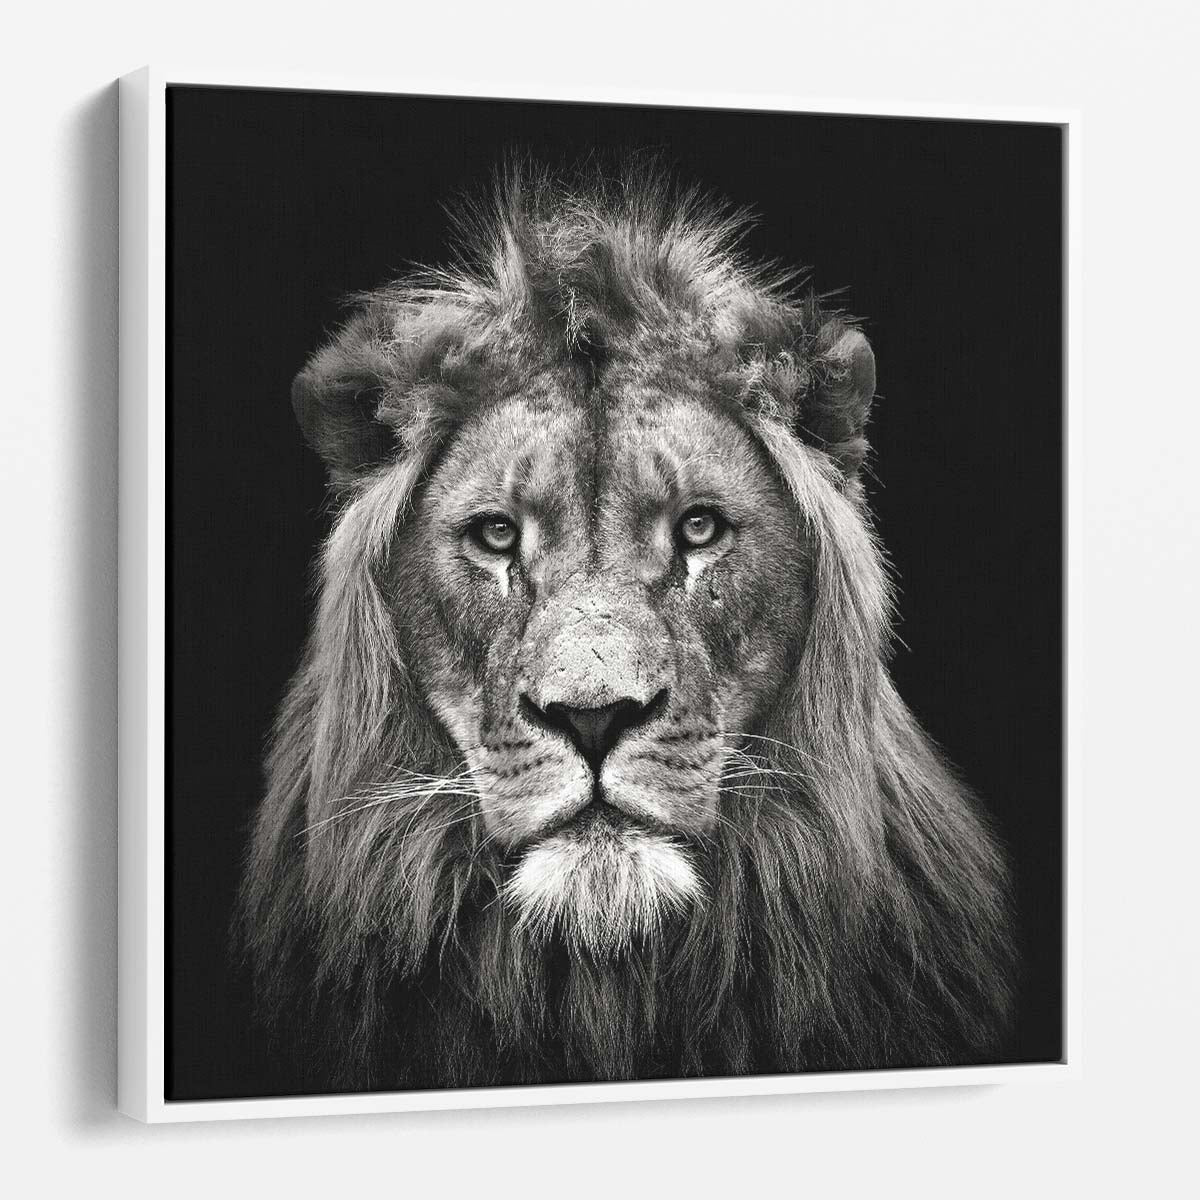 Dark Monochrome Lion Portrait Animal Photography Wall Art by Luxuriance Designs. Made in USA.